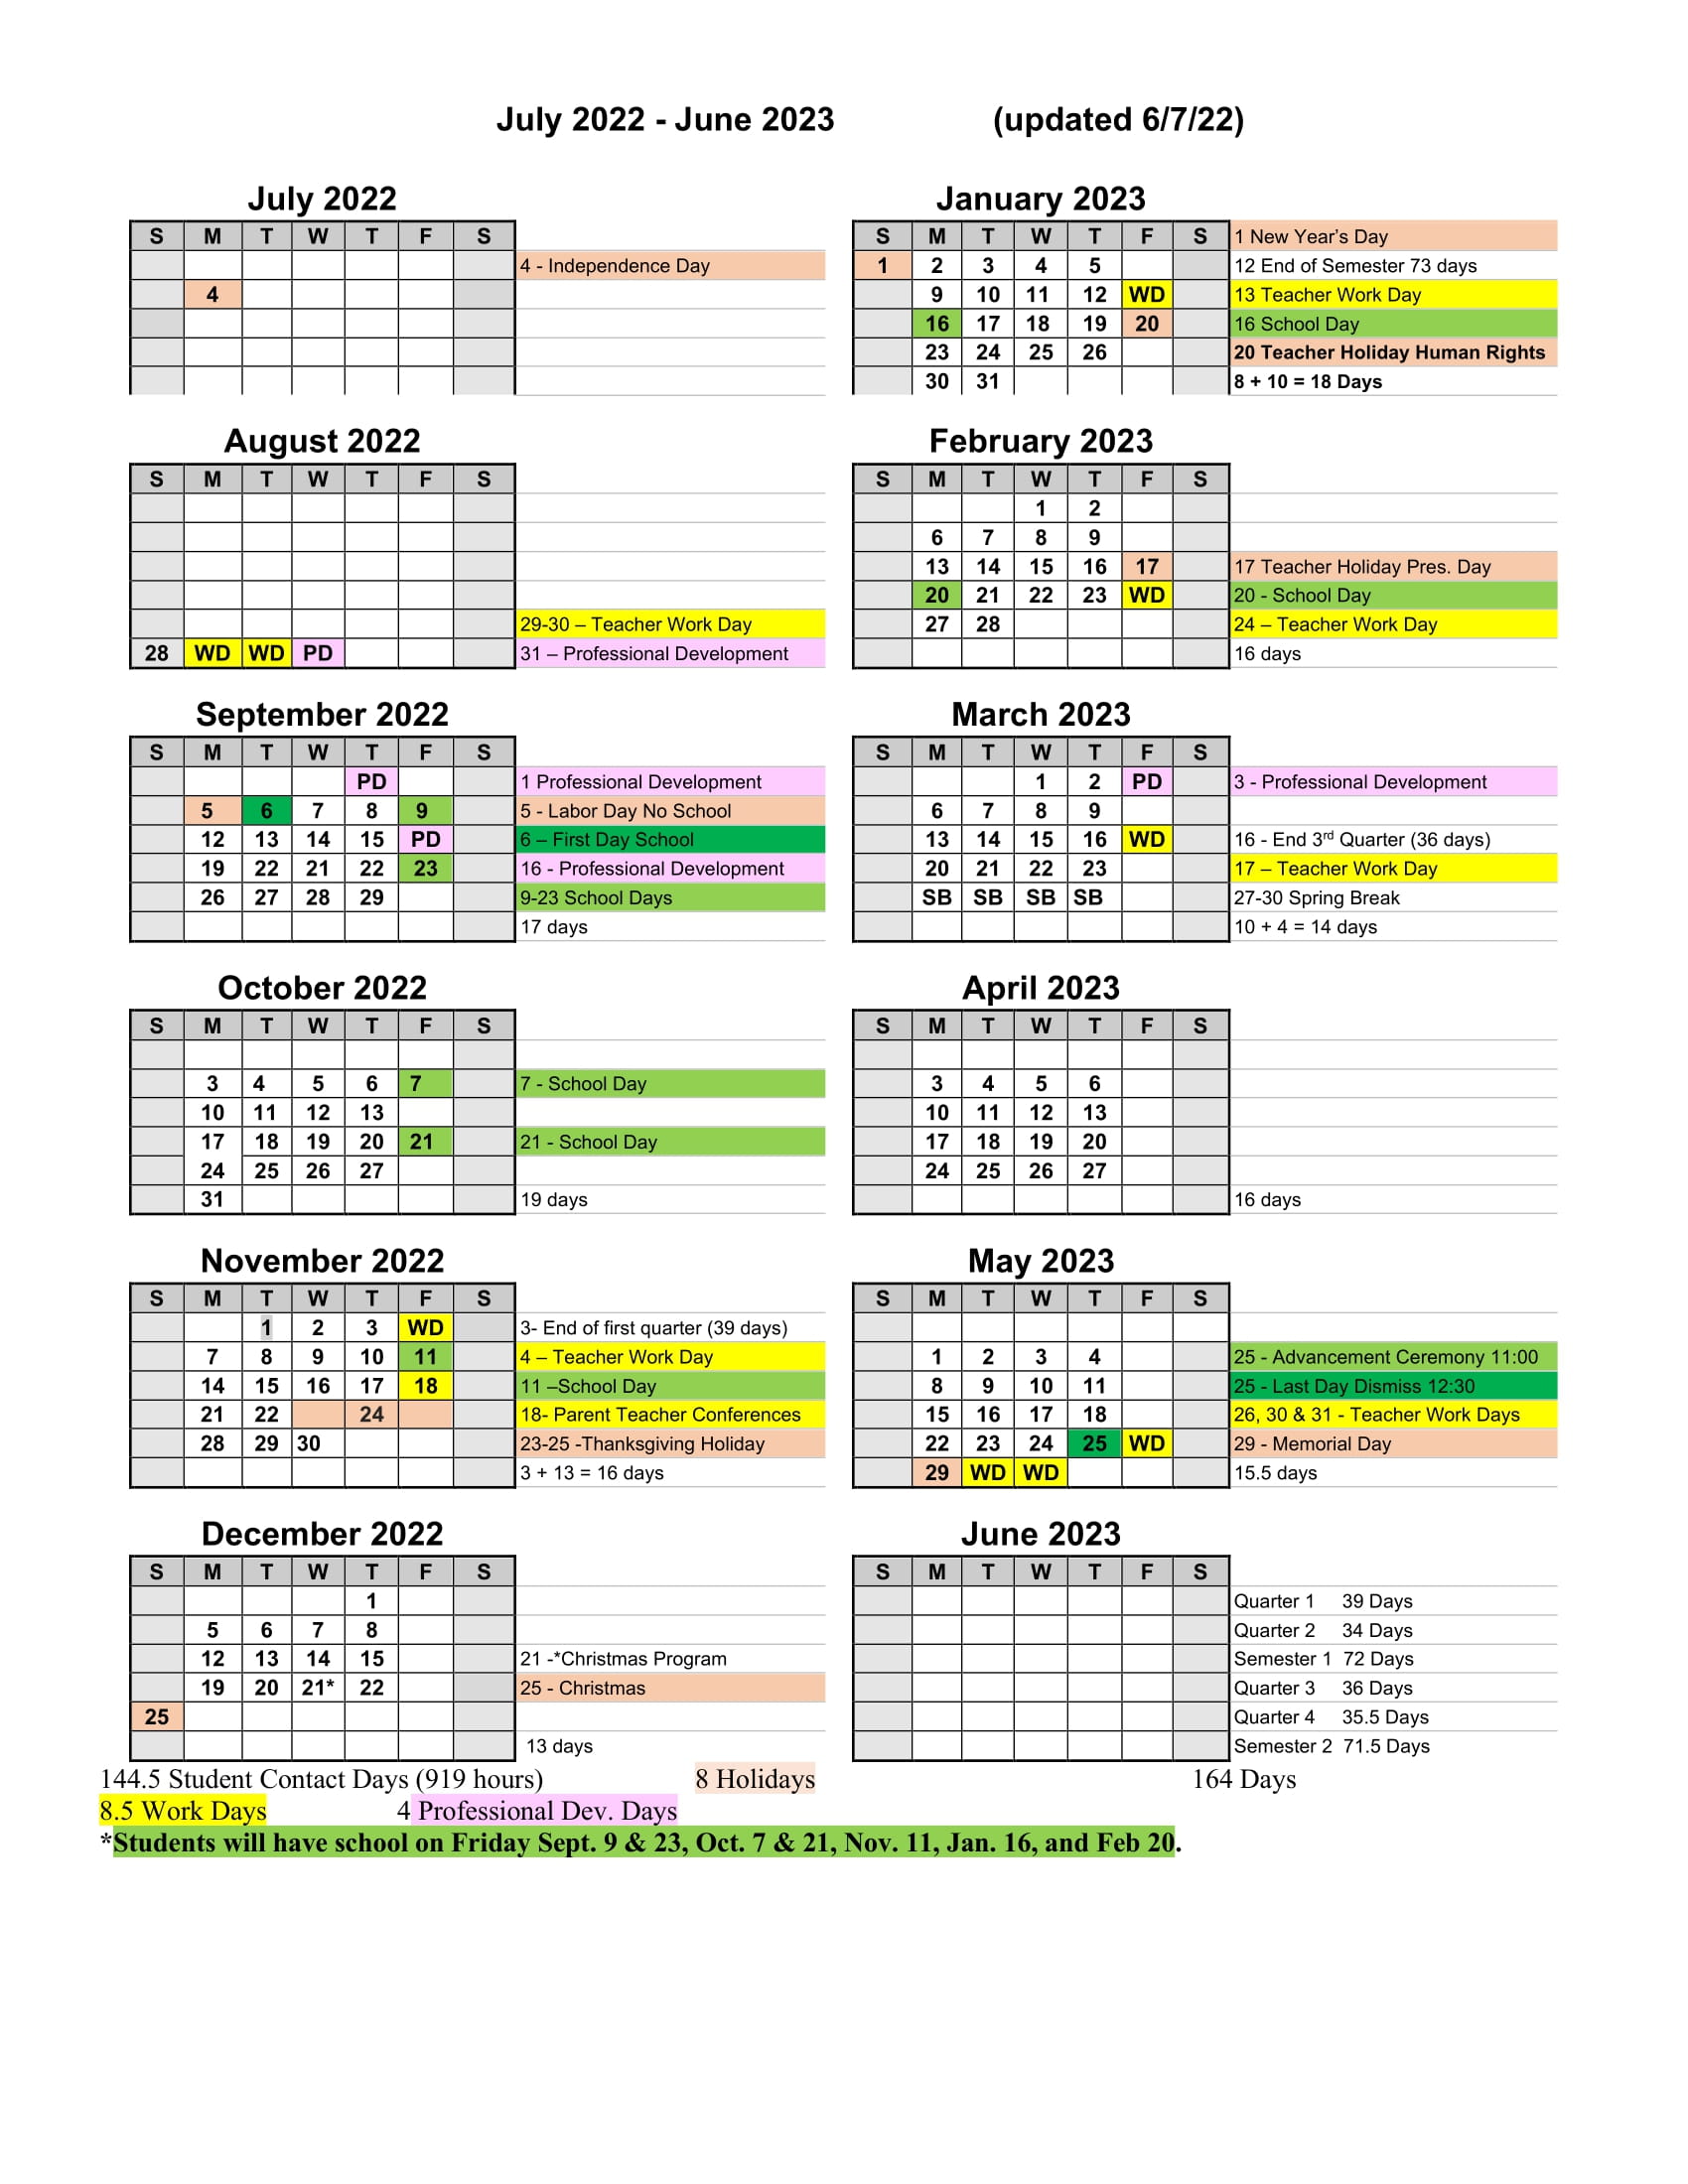 School Calendar Calder 2022-23